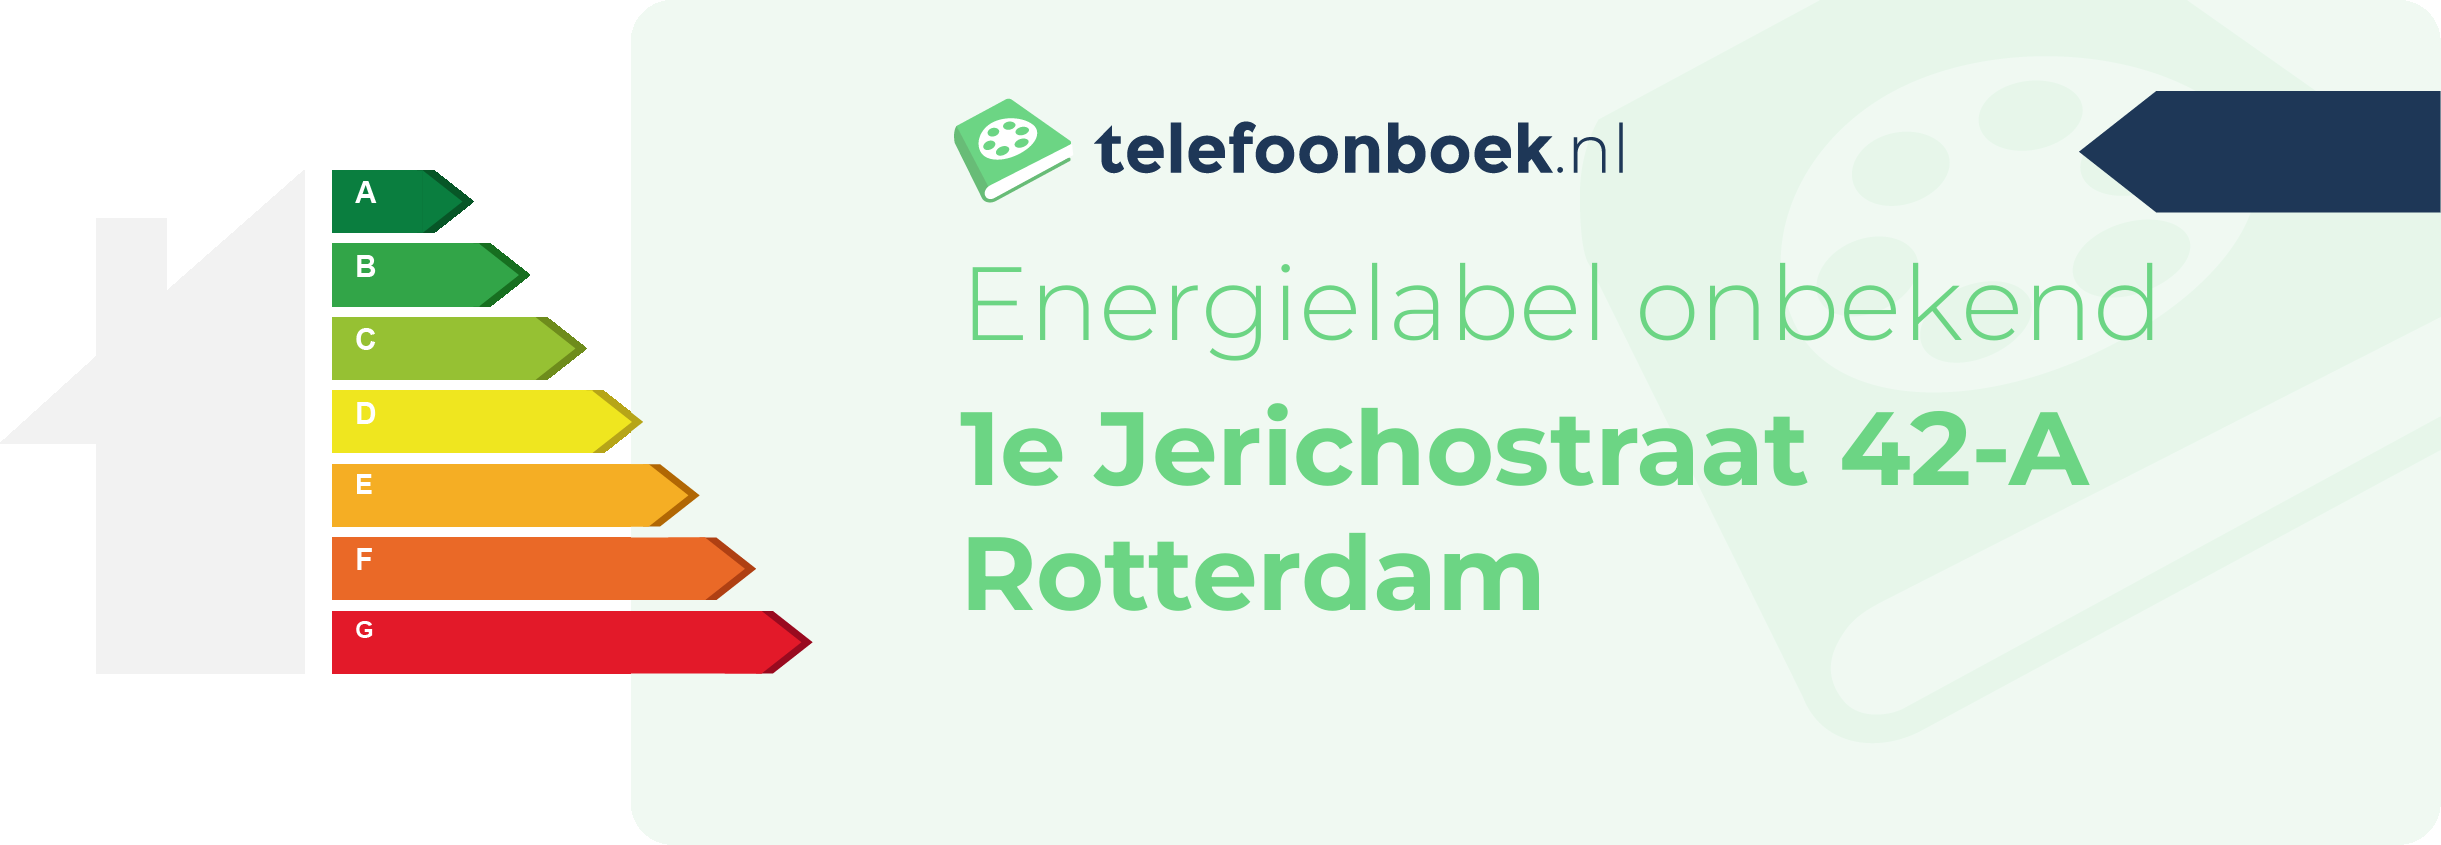 Energielabel 1e Jerichostraat 42-A Rotterdam